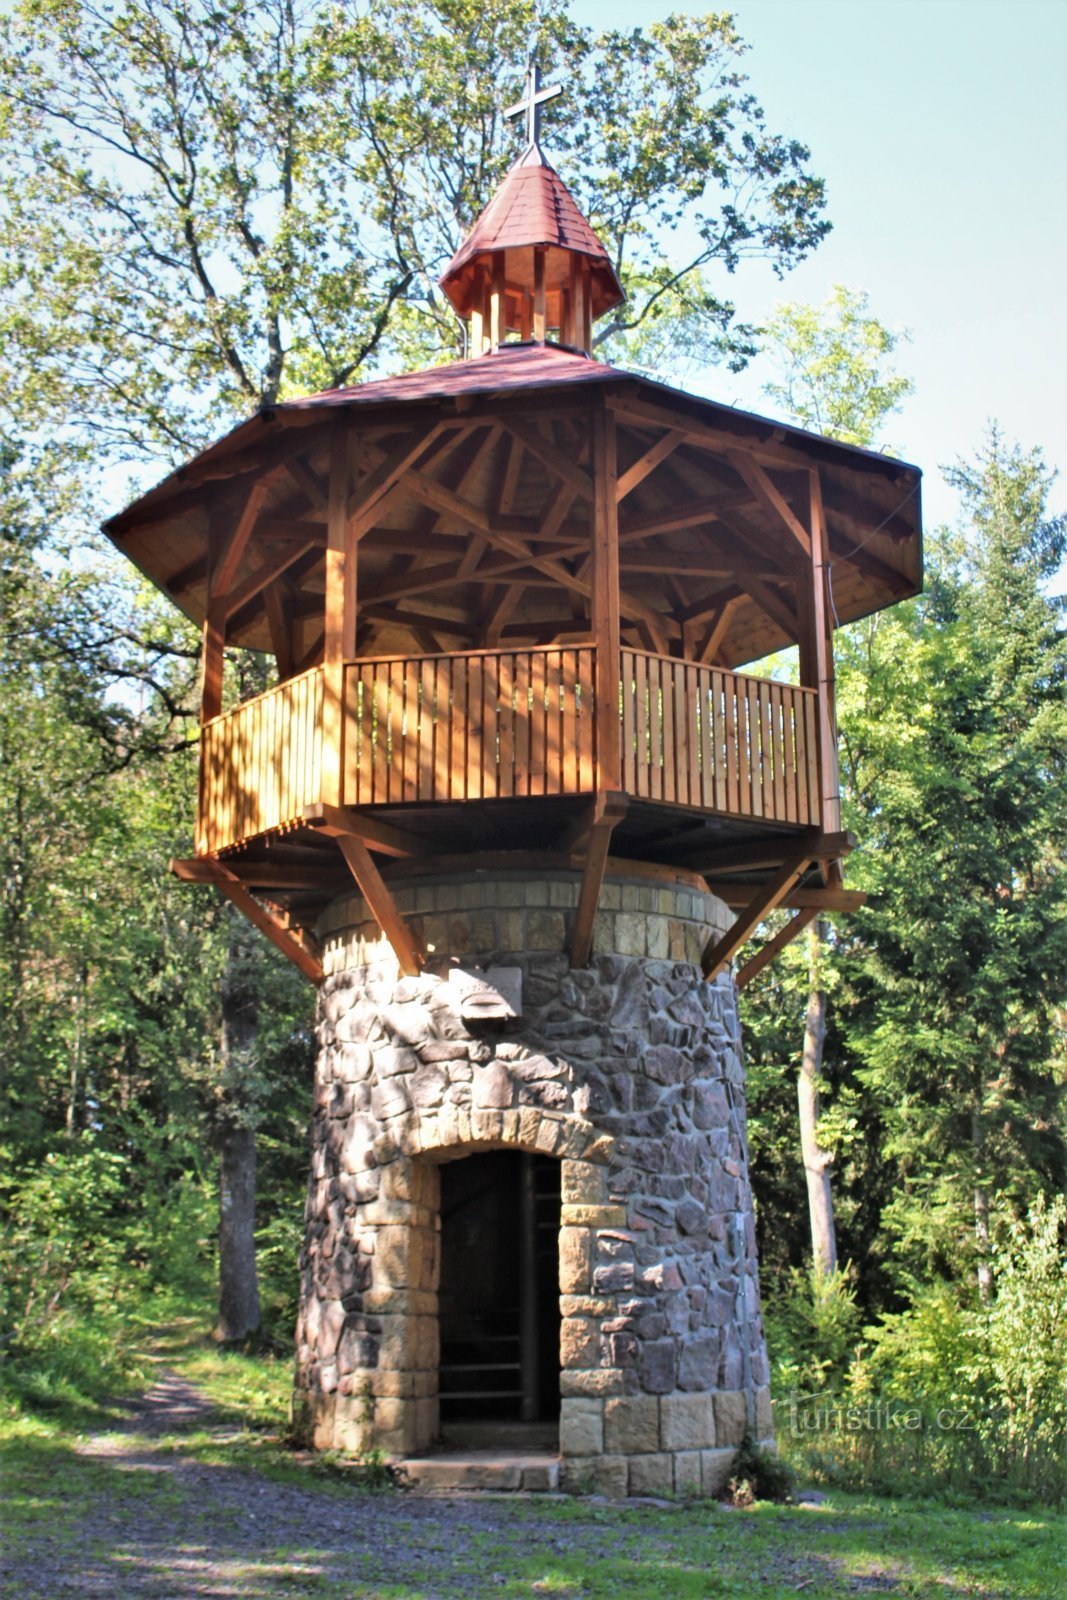 Incrocio turistico Cima del pendio - Torre di avvistamento Hláska